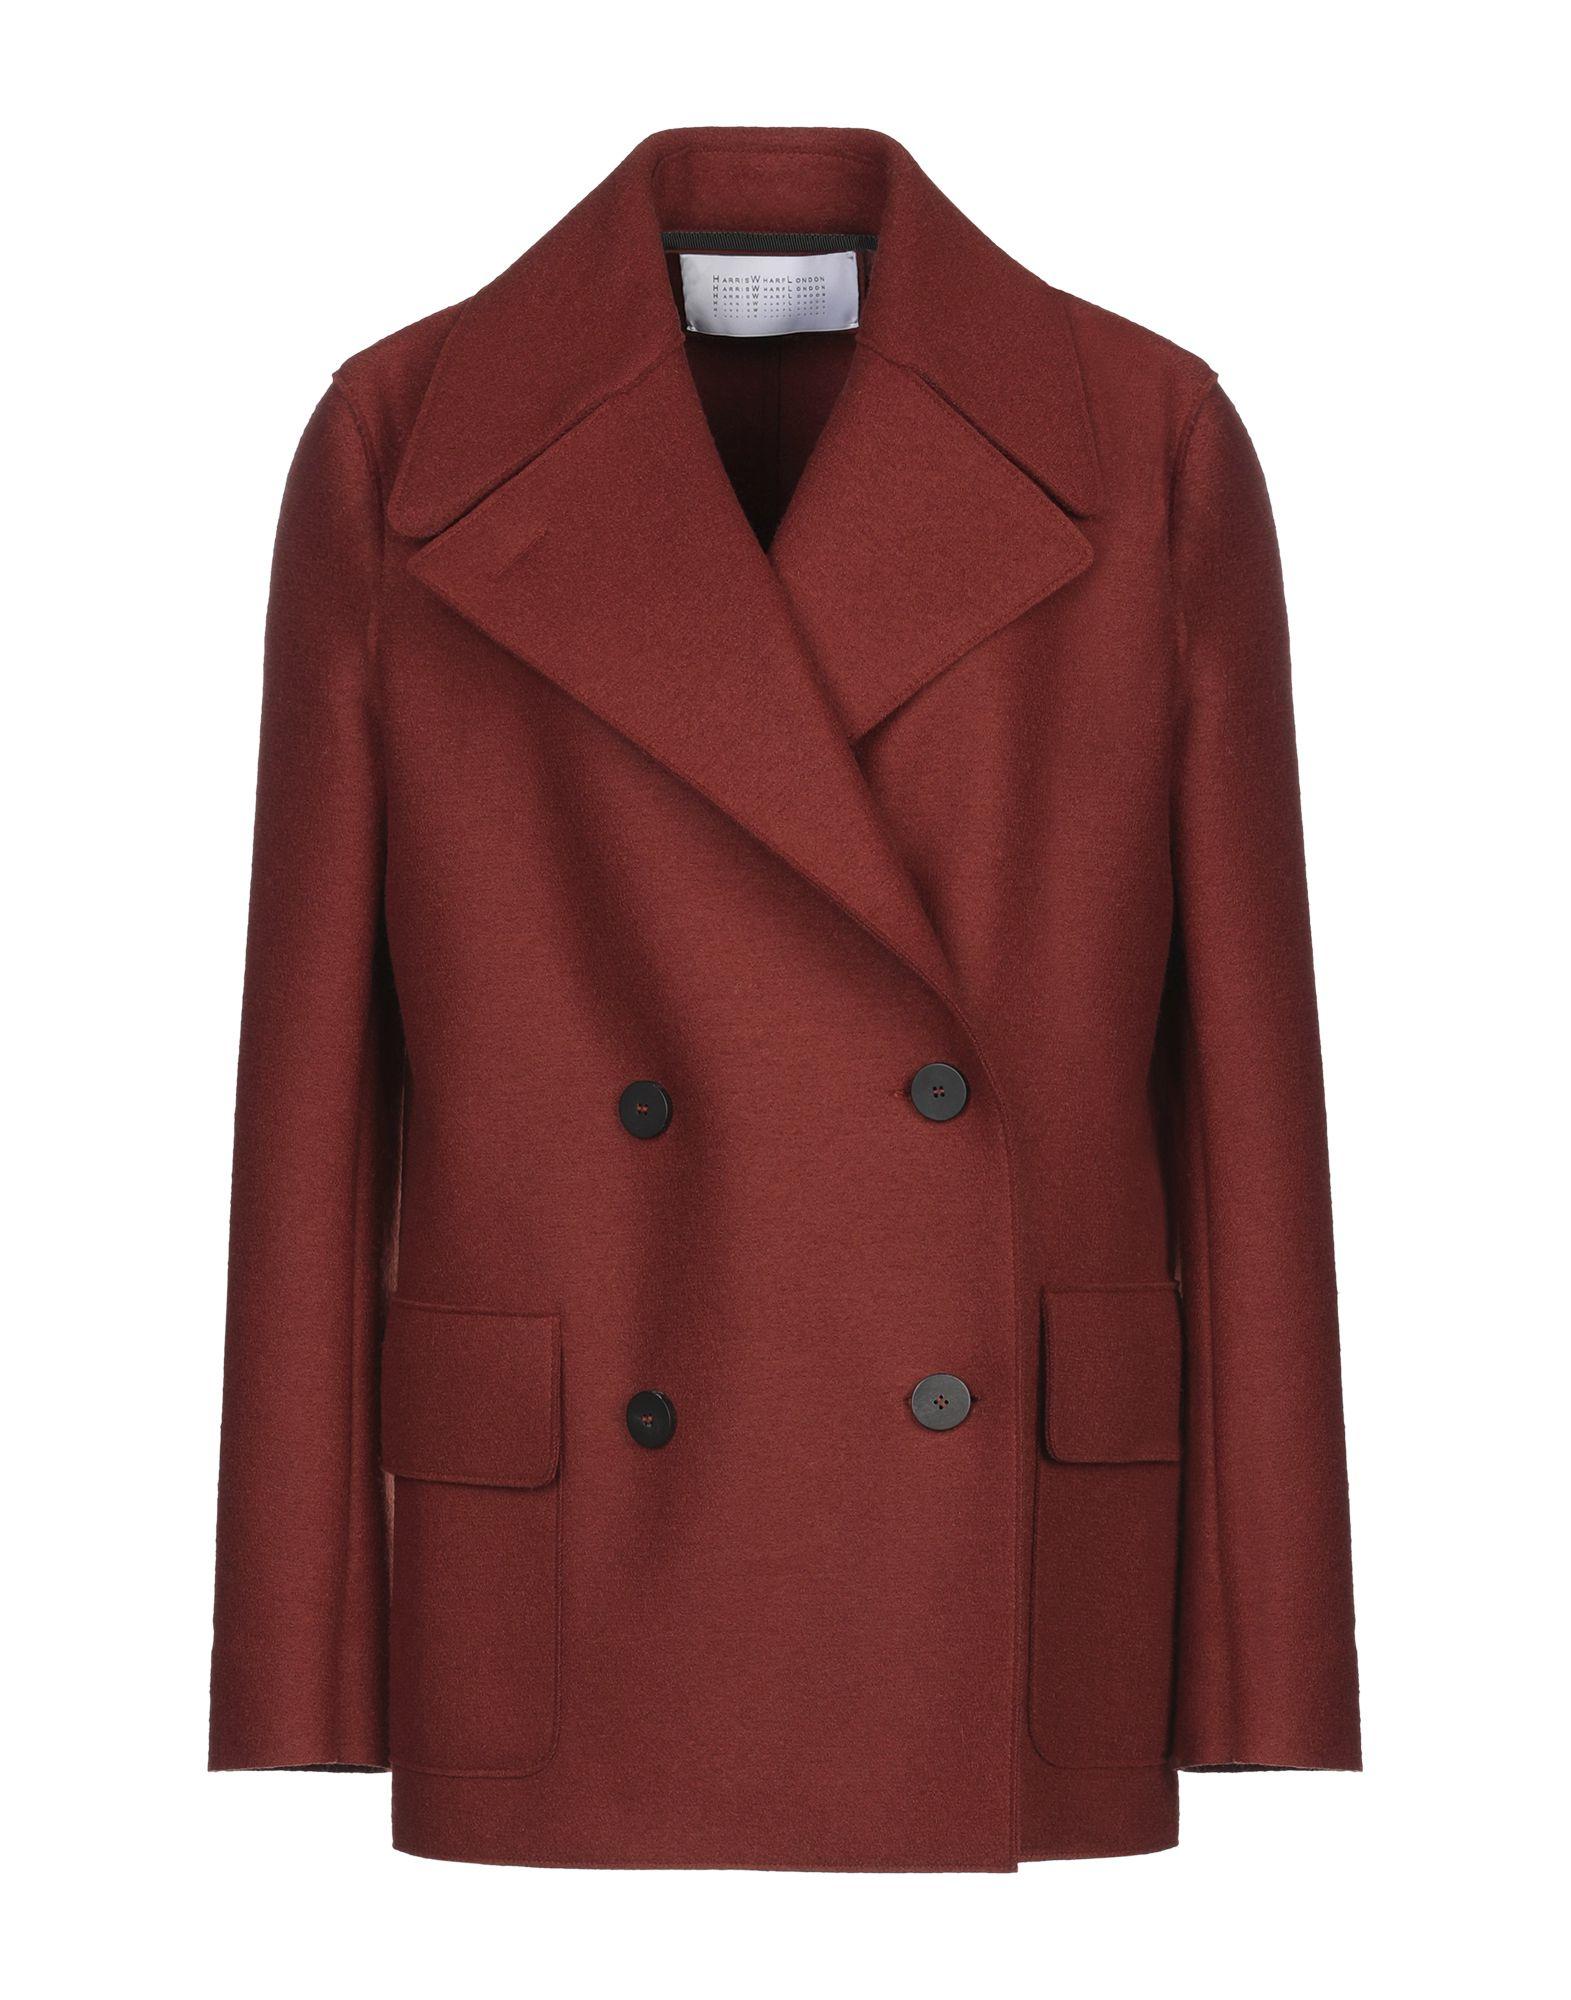 Harris Wharf London Wool Coat in Rust (Red) - Lyst